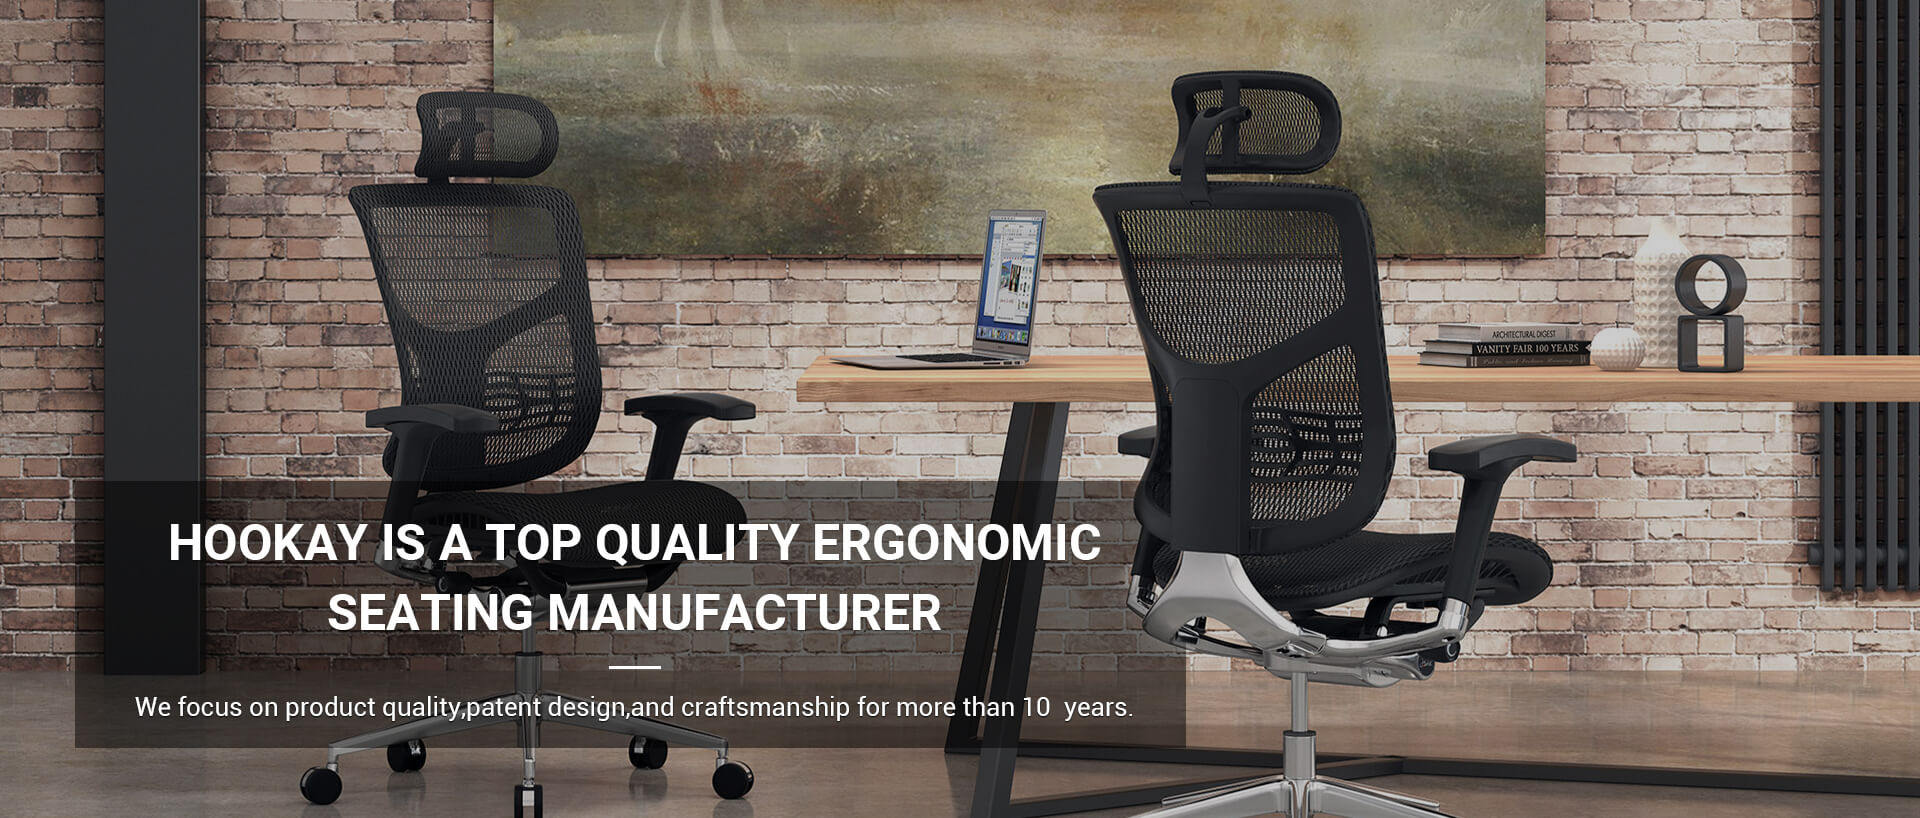 Top Quality Ergonomic Seating Manufacturer